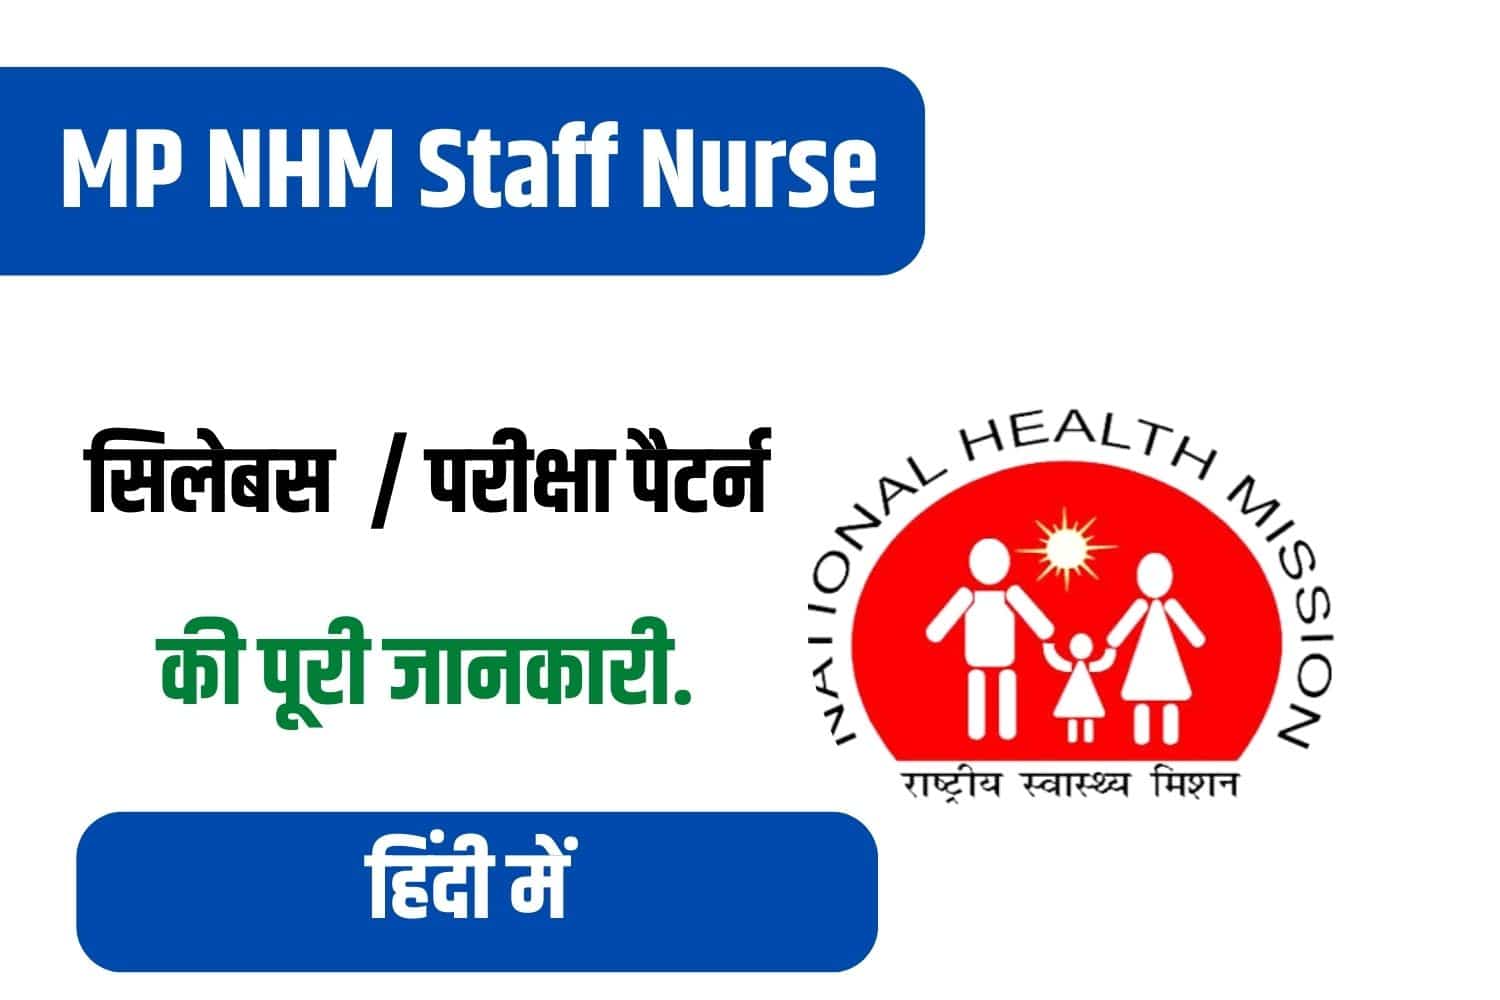 NHM MP Staff Nurse Syllabus in Hindi | एनएचएम मध्य प्रदेश स्टाफ नर्स सिलेबस